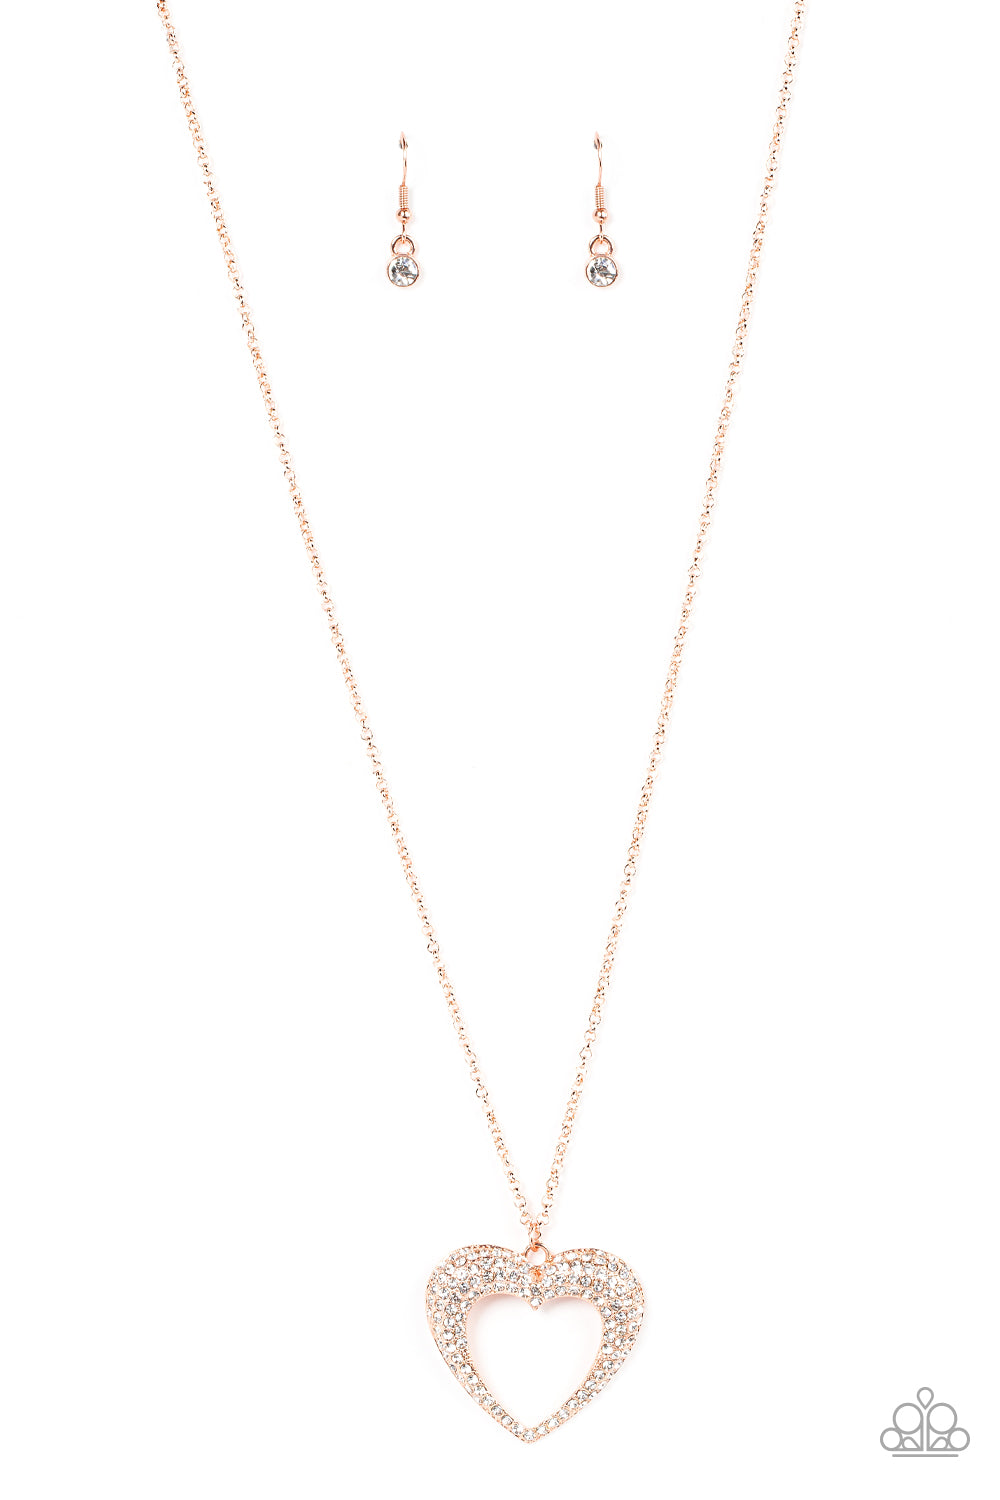 Cupid Charisma Necklace (Copper, White, Gold)